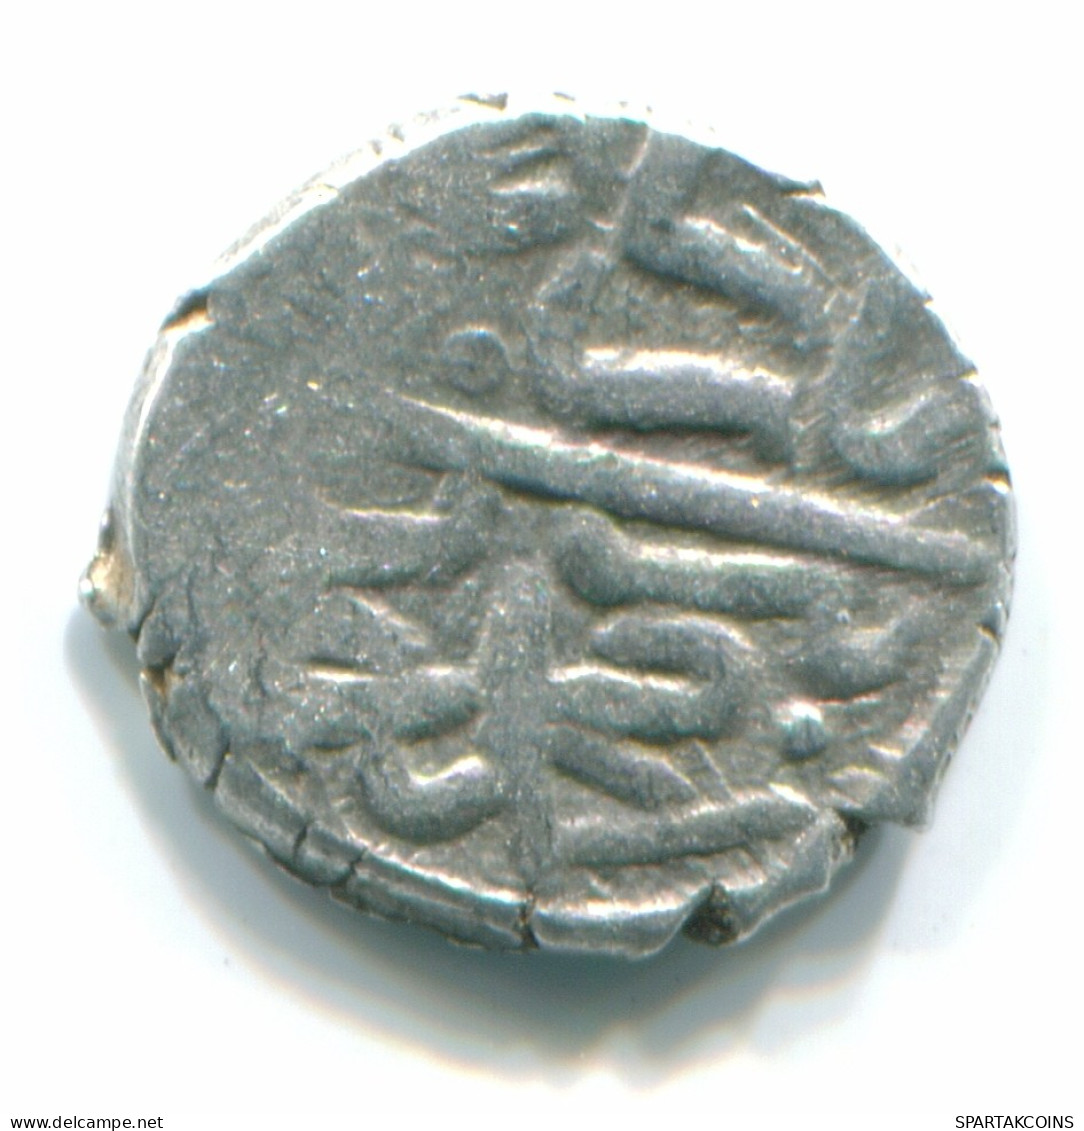 OTTOMAN EMPIRE BAYEZID II 1 Akce 1481-1512 AD Silver Islamic Coin #MED10070.7.F.A - Islámicas